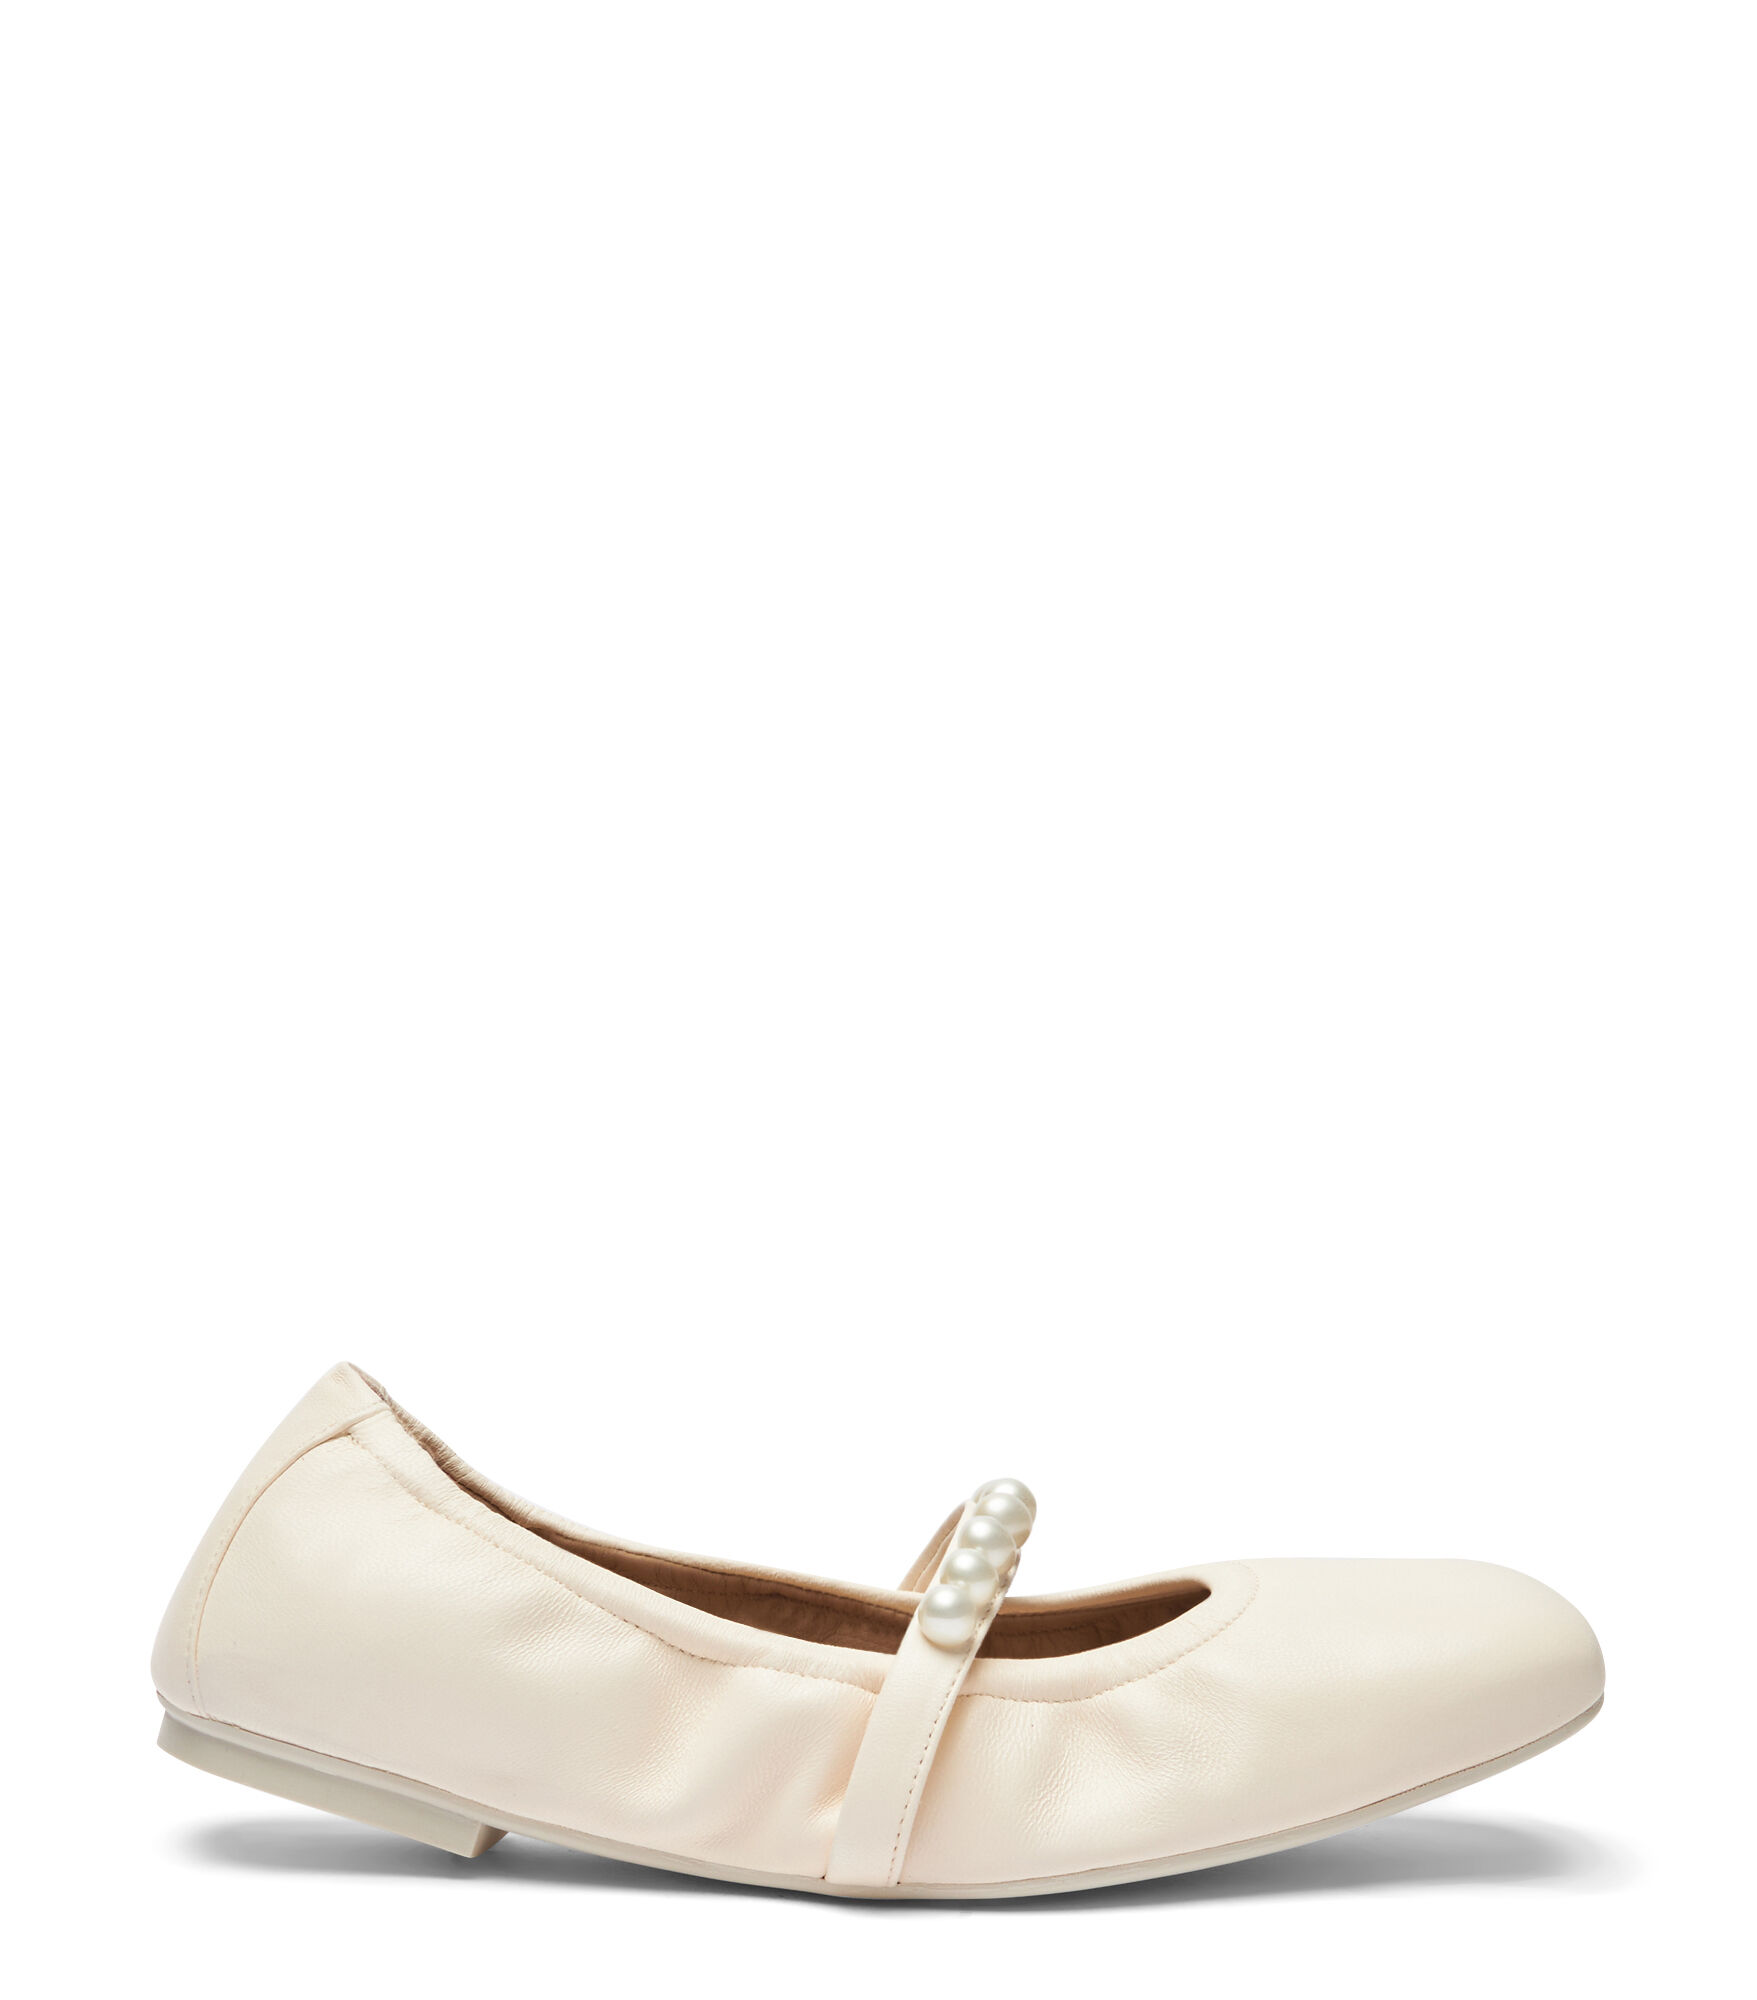 Stuart Weitzman Goldie Ballet Flat - Donna Mocassini E Scarpe Basse Seashell 36.5